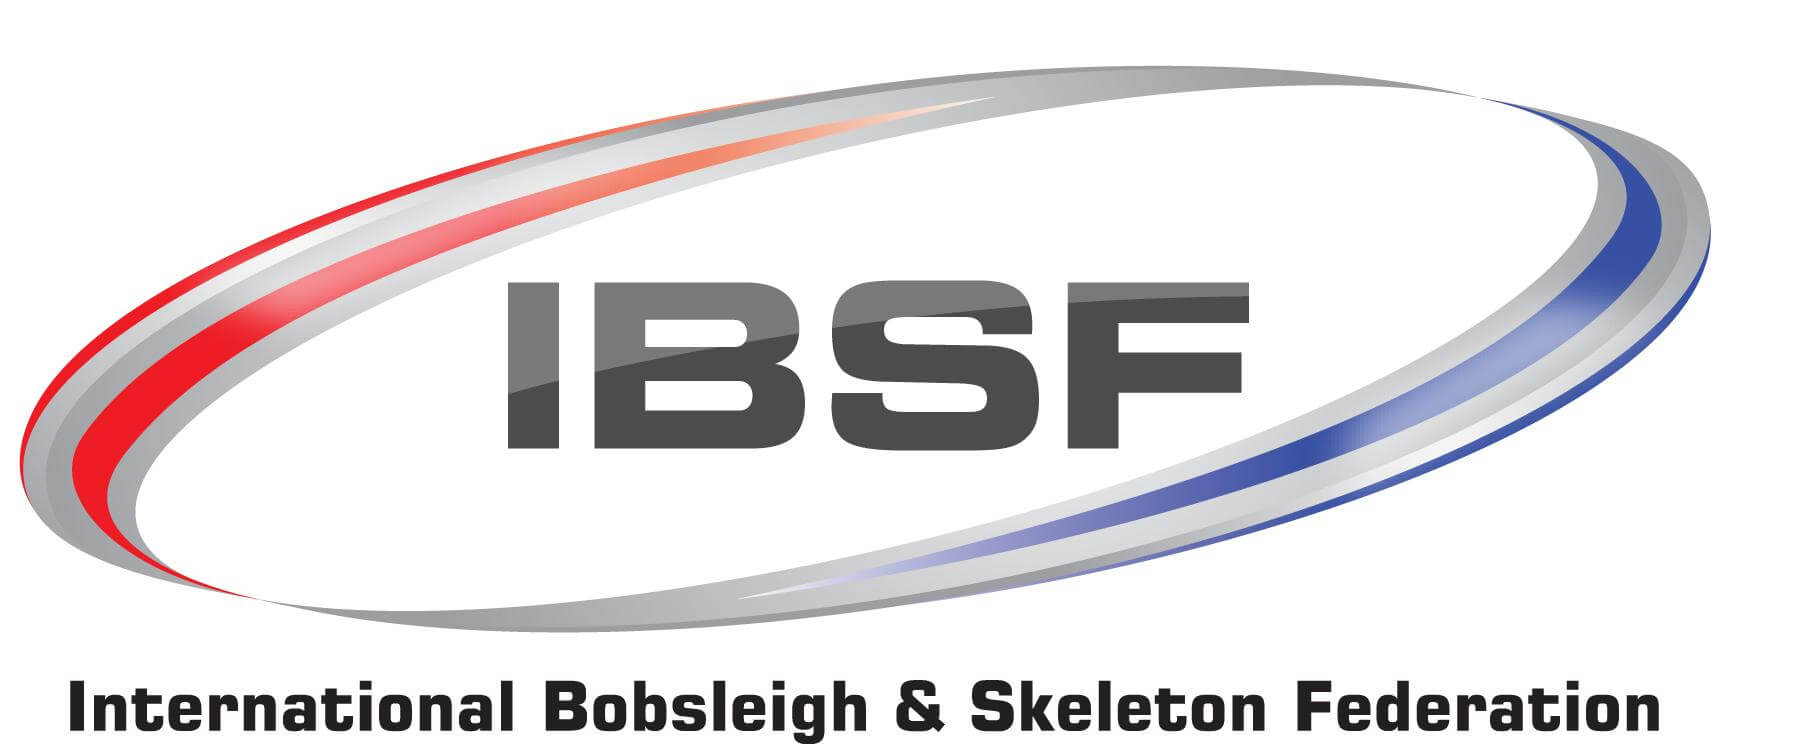 FIBT Federation Internationale de Bobsleigh et de Tobogganing logo1